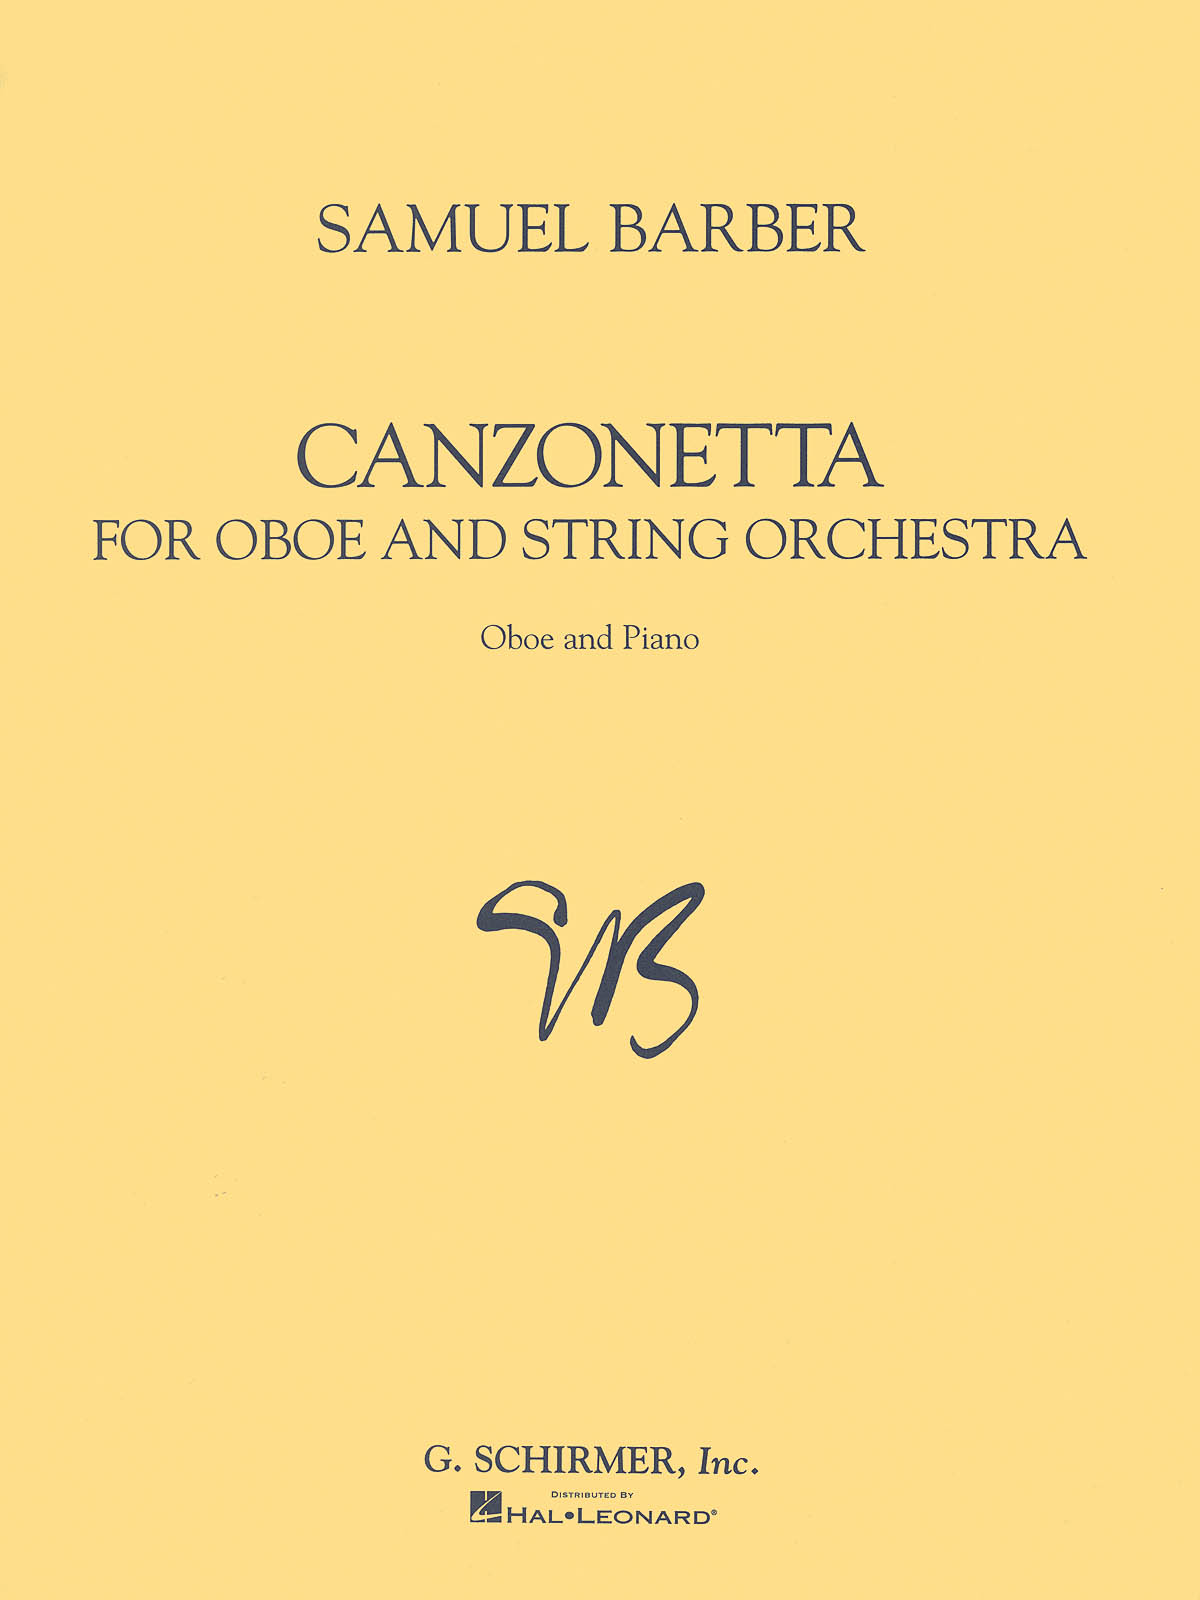 Adagio for Strings, op. 11 Samuel Barber. Samuel Barber - Capricorn Concerto. Samuel Barber - Adagio for Strings Klavier. Adagio for Strings Samuel Barber слушать 2 скрипка. Barber adagio